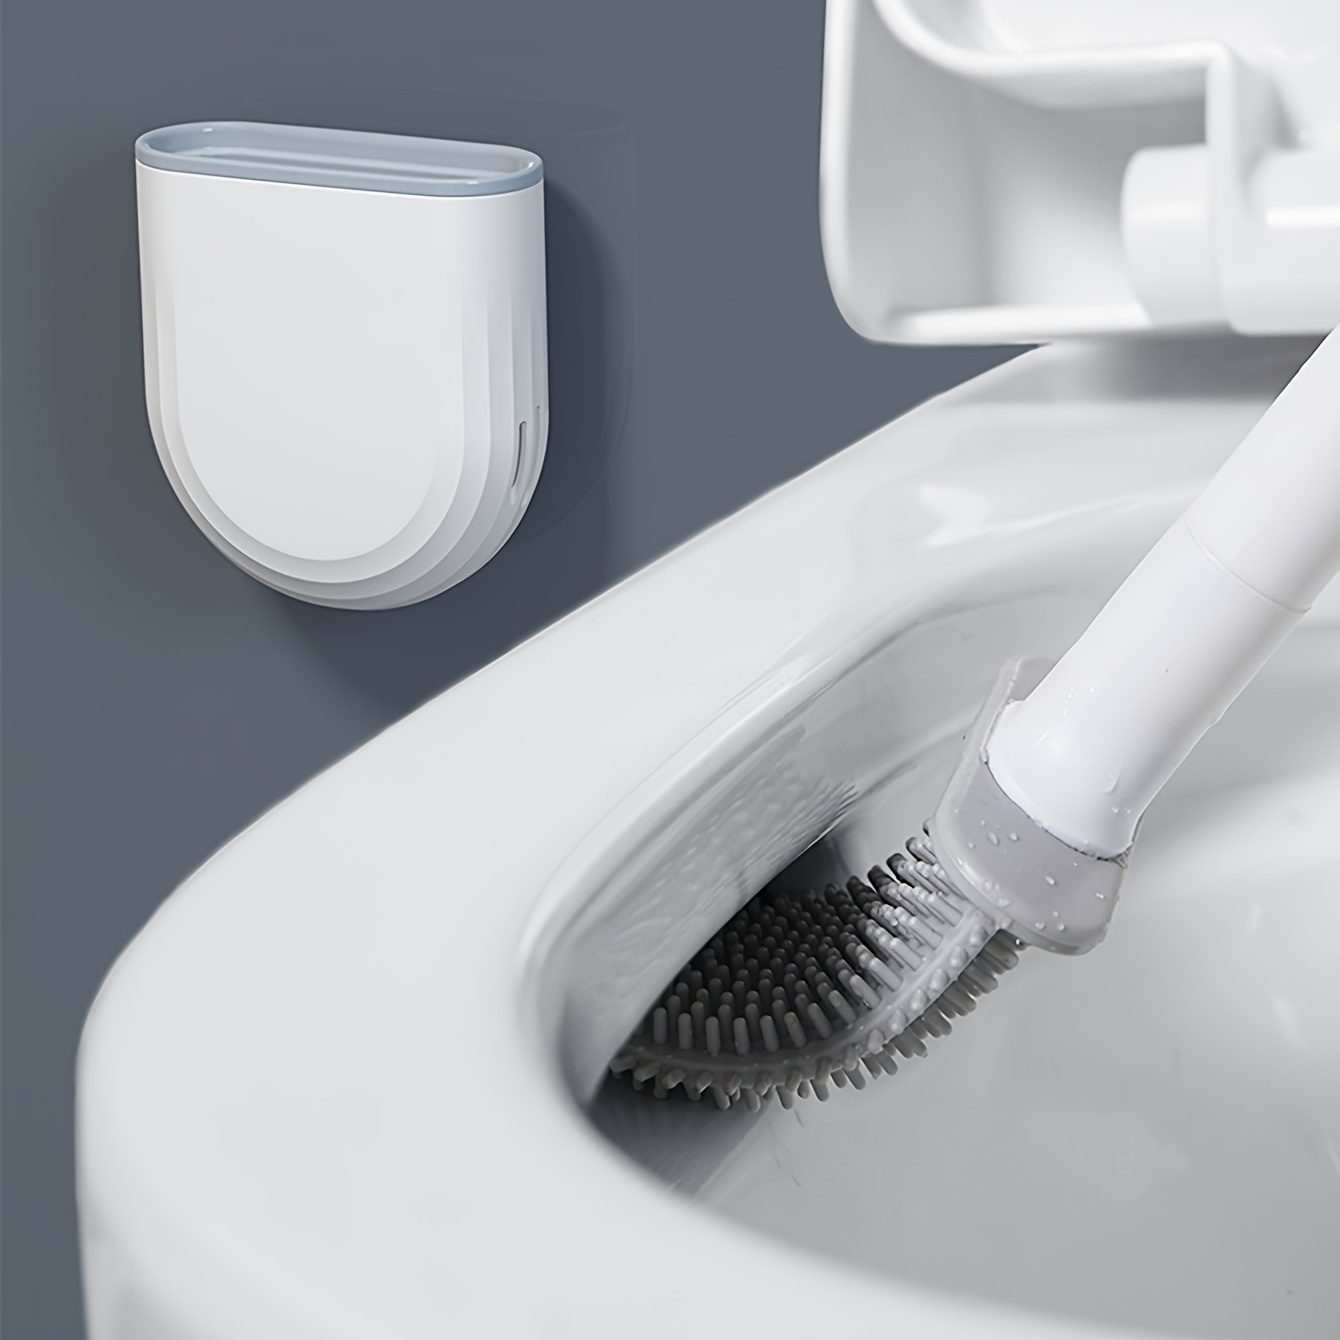 2pcs hanging toilet brushes For Cleaning Scrub Brush Toilet Bowl Brush